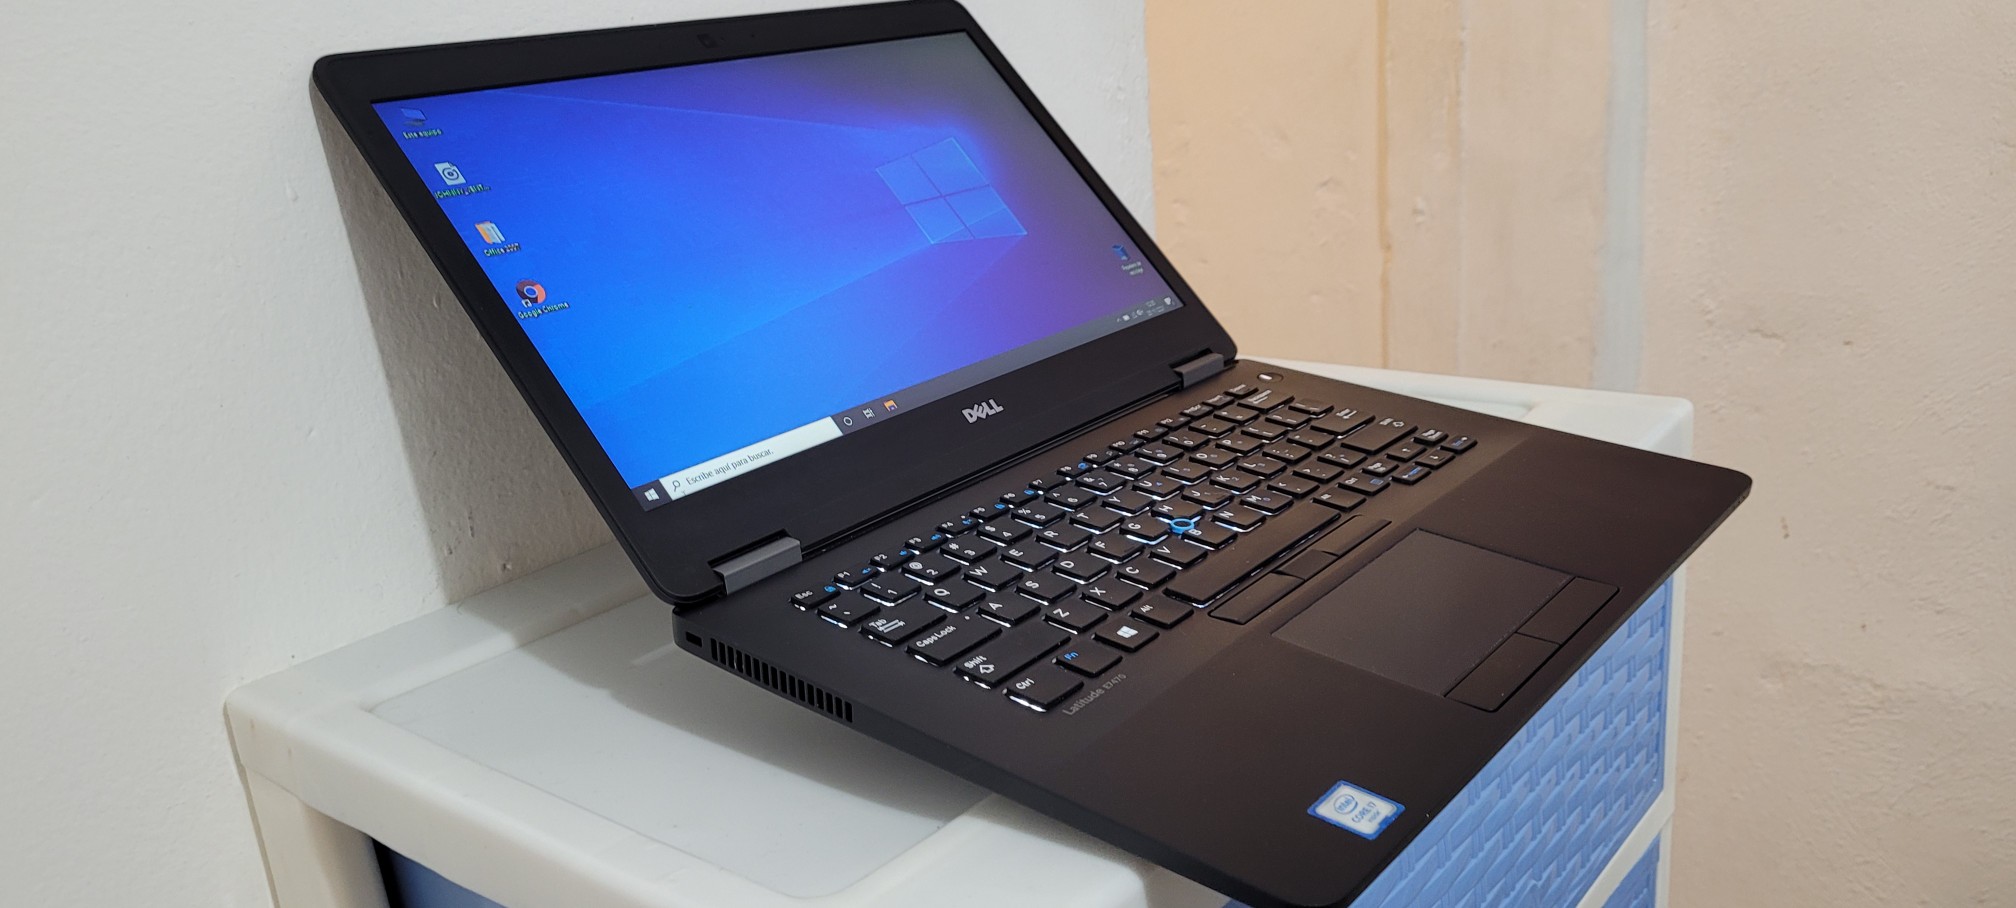 computadoras y laptops - Dell 7480 14 Pulg Core i7 7ma Ram 8gb Disco 128gb SSD Full 1080p 1